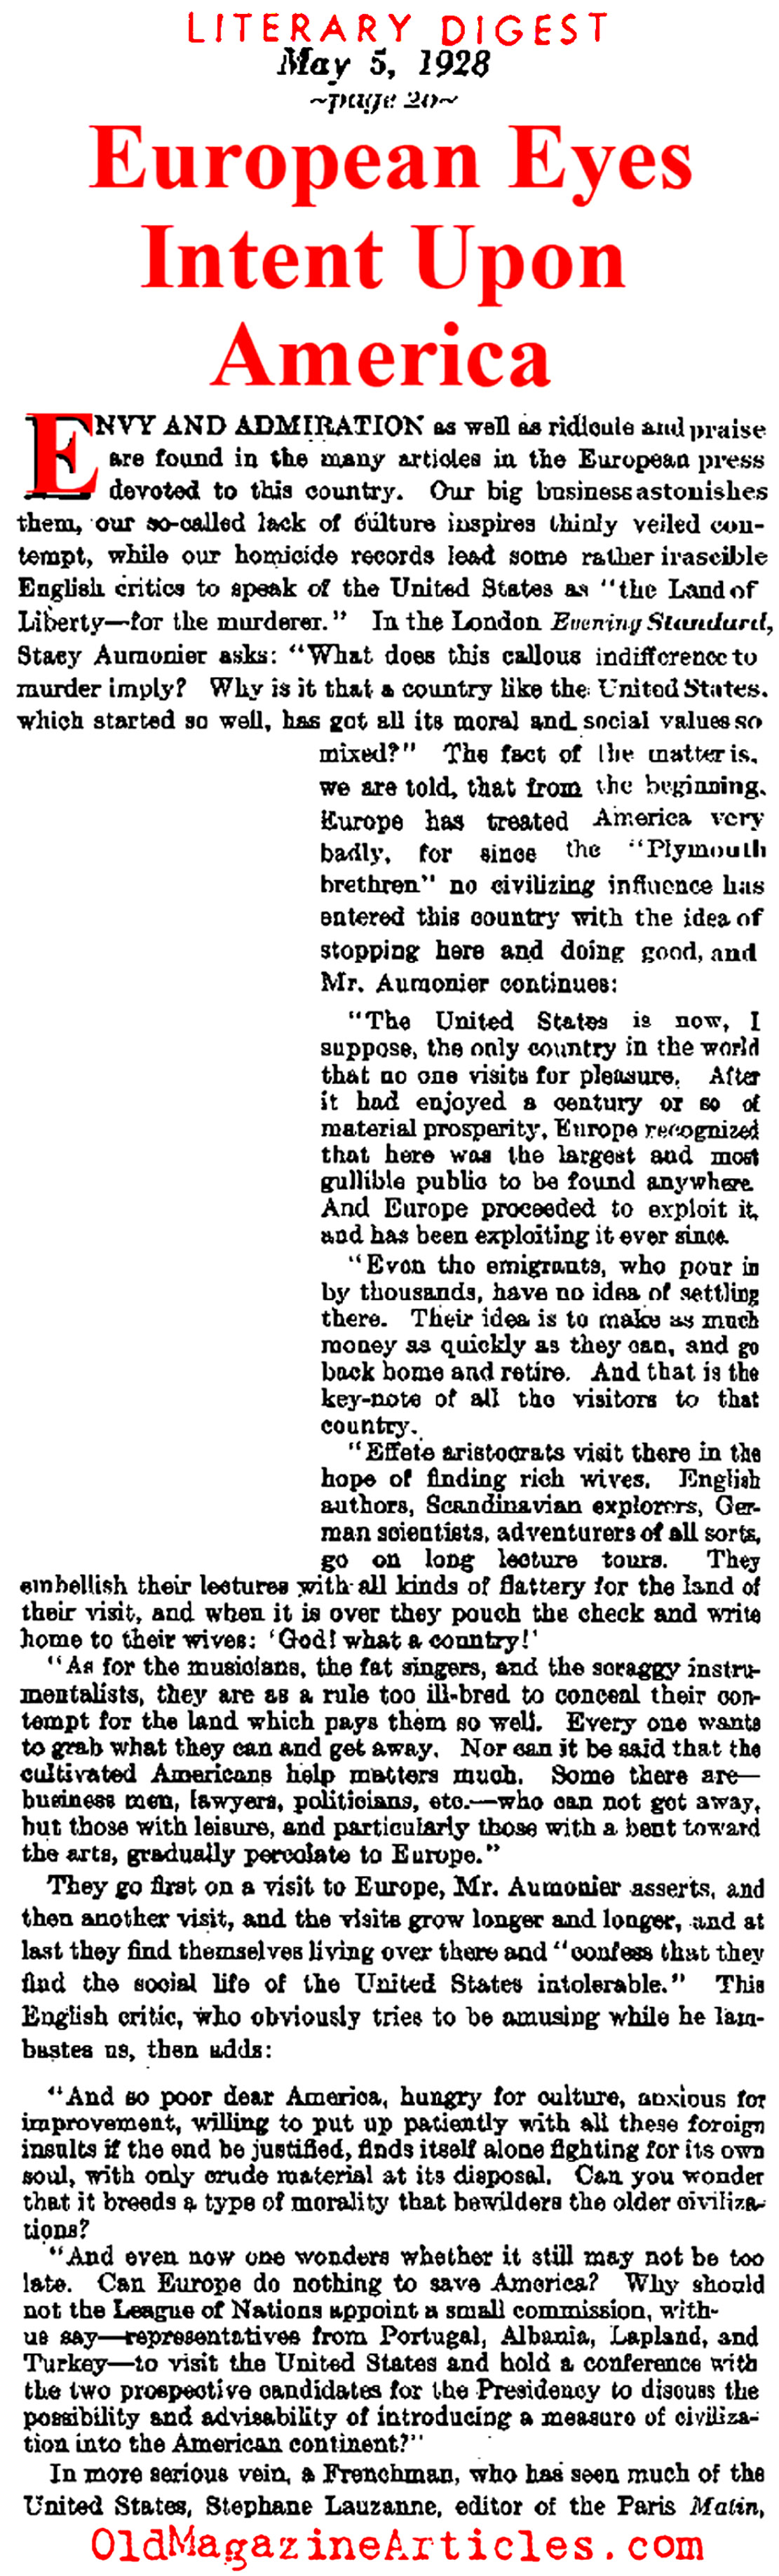 America Vilified in the European Press (Literary Digest, 1928)